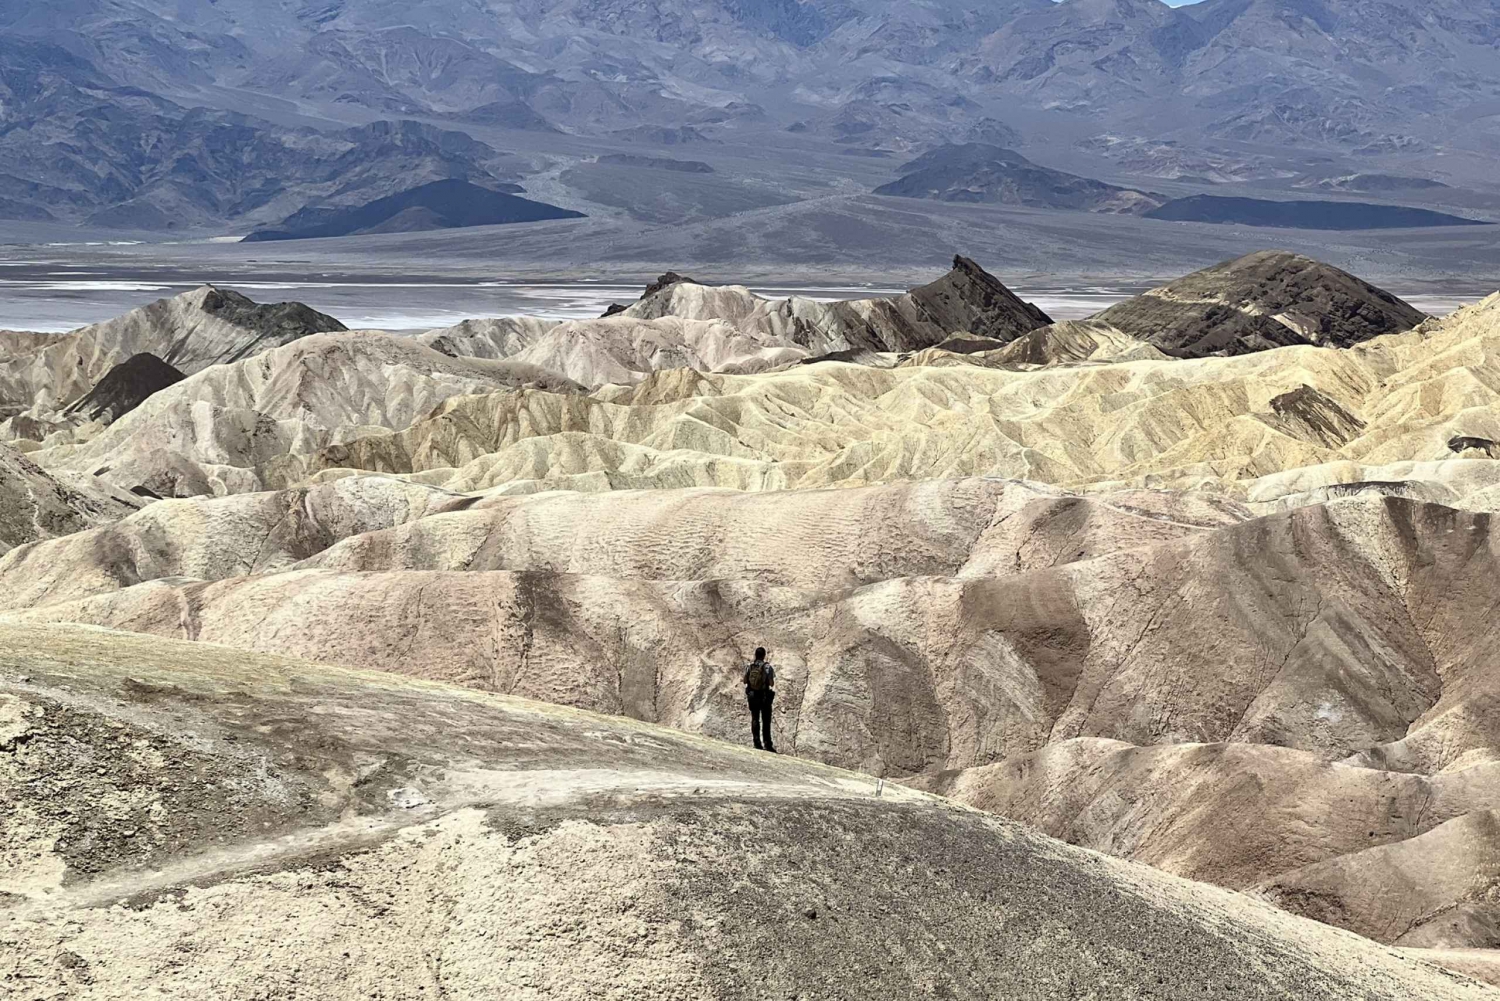 Las Vegas: Death Valley Small Group Tour